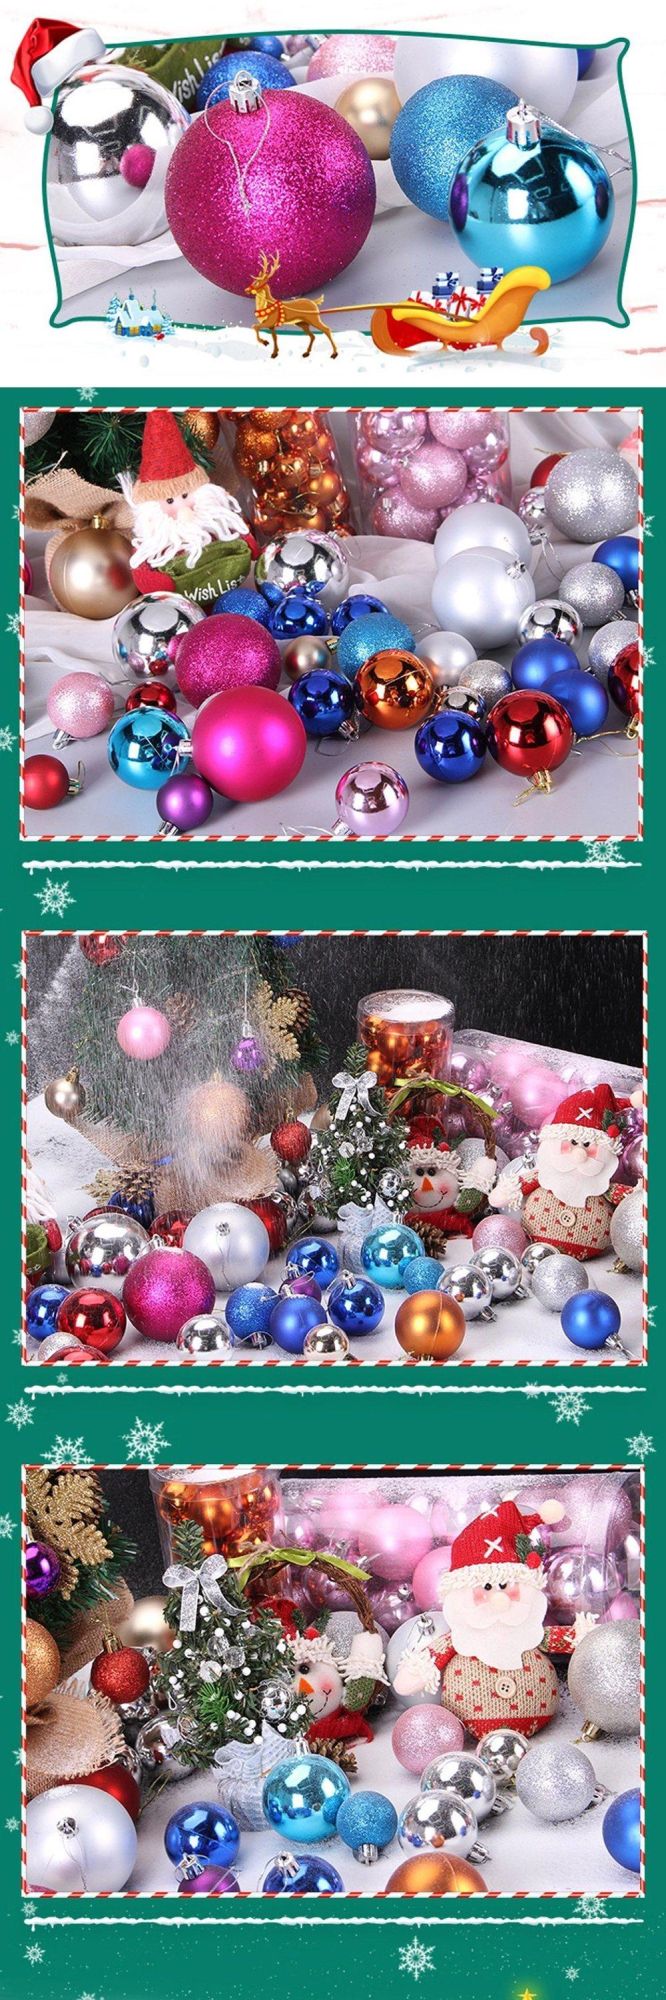 Decorating Colorful Hanging Christmas Ornament Balls